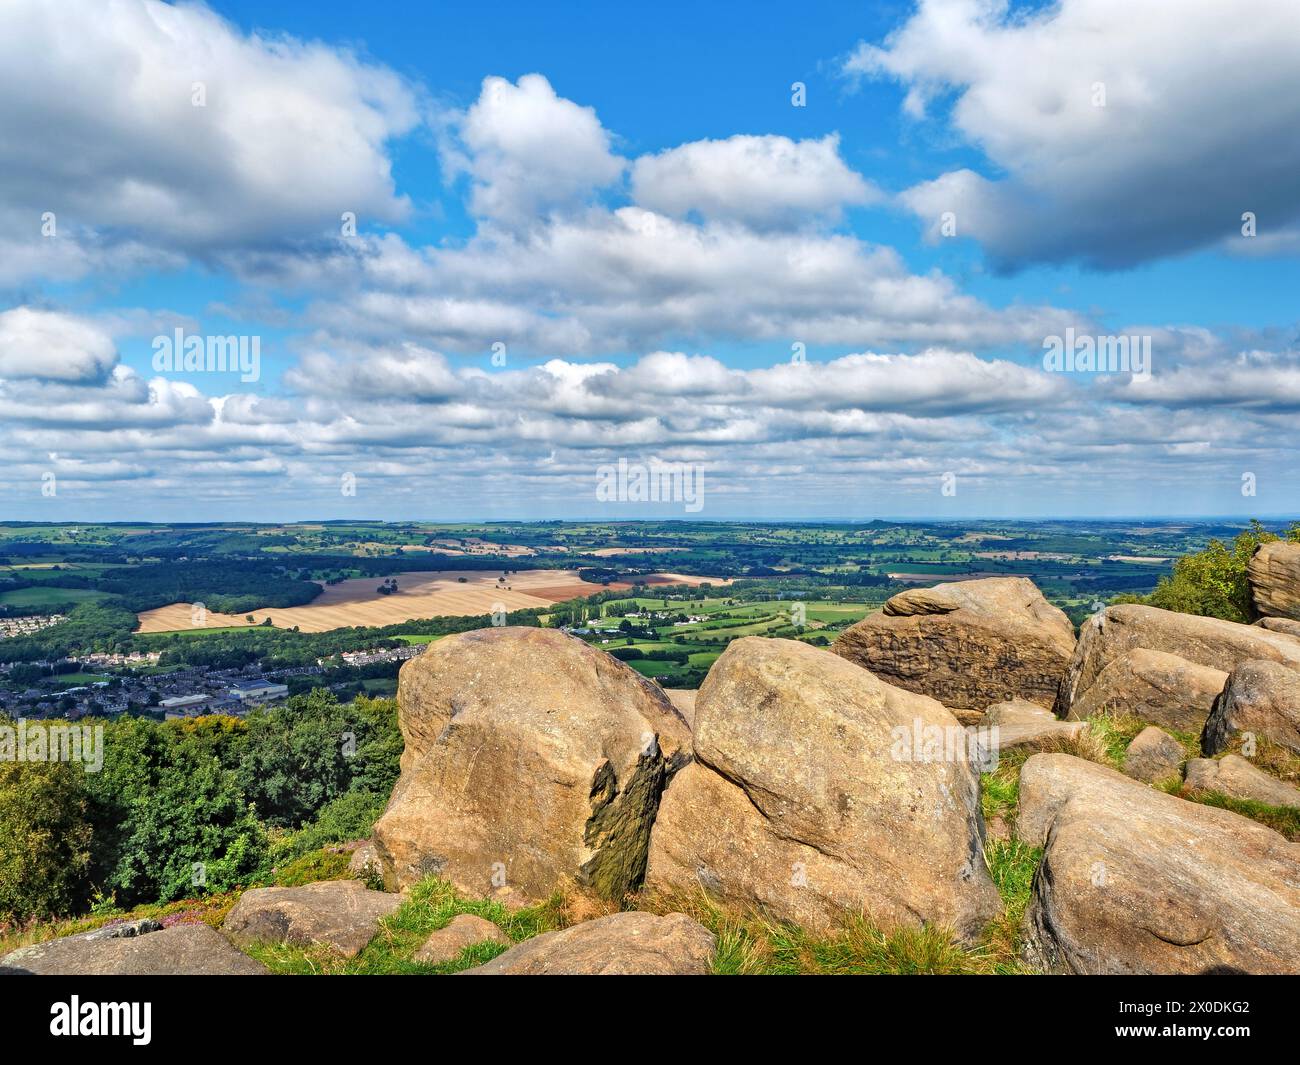 UK, West Yorkshire, Otley, Otley Chevin, Surprise View mit Blick auf Otley Town. Stockfoto